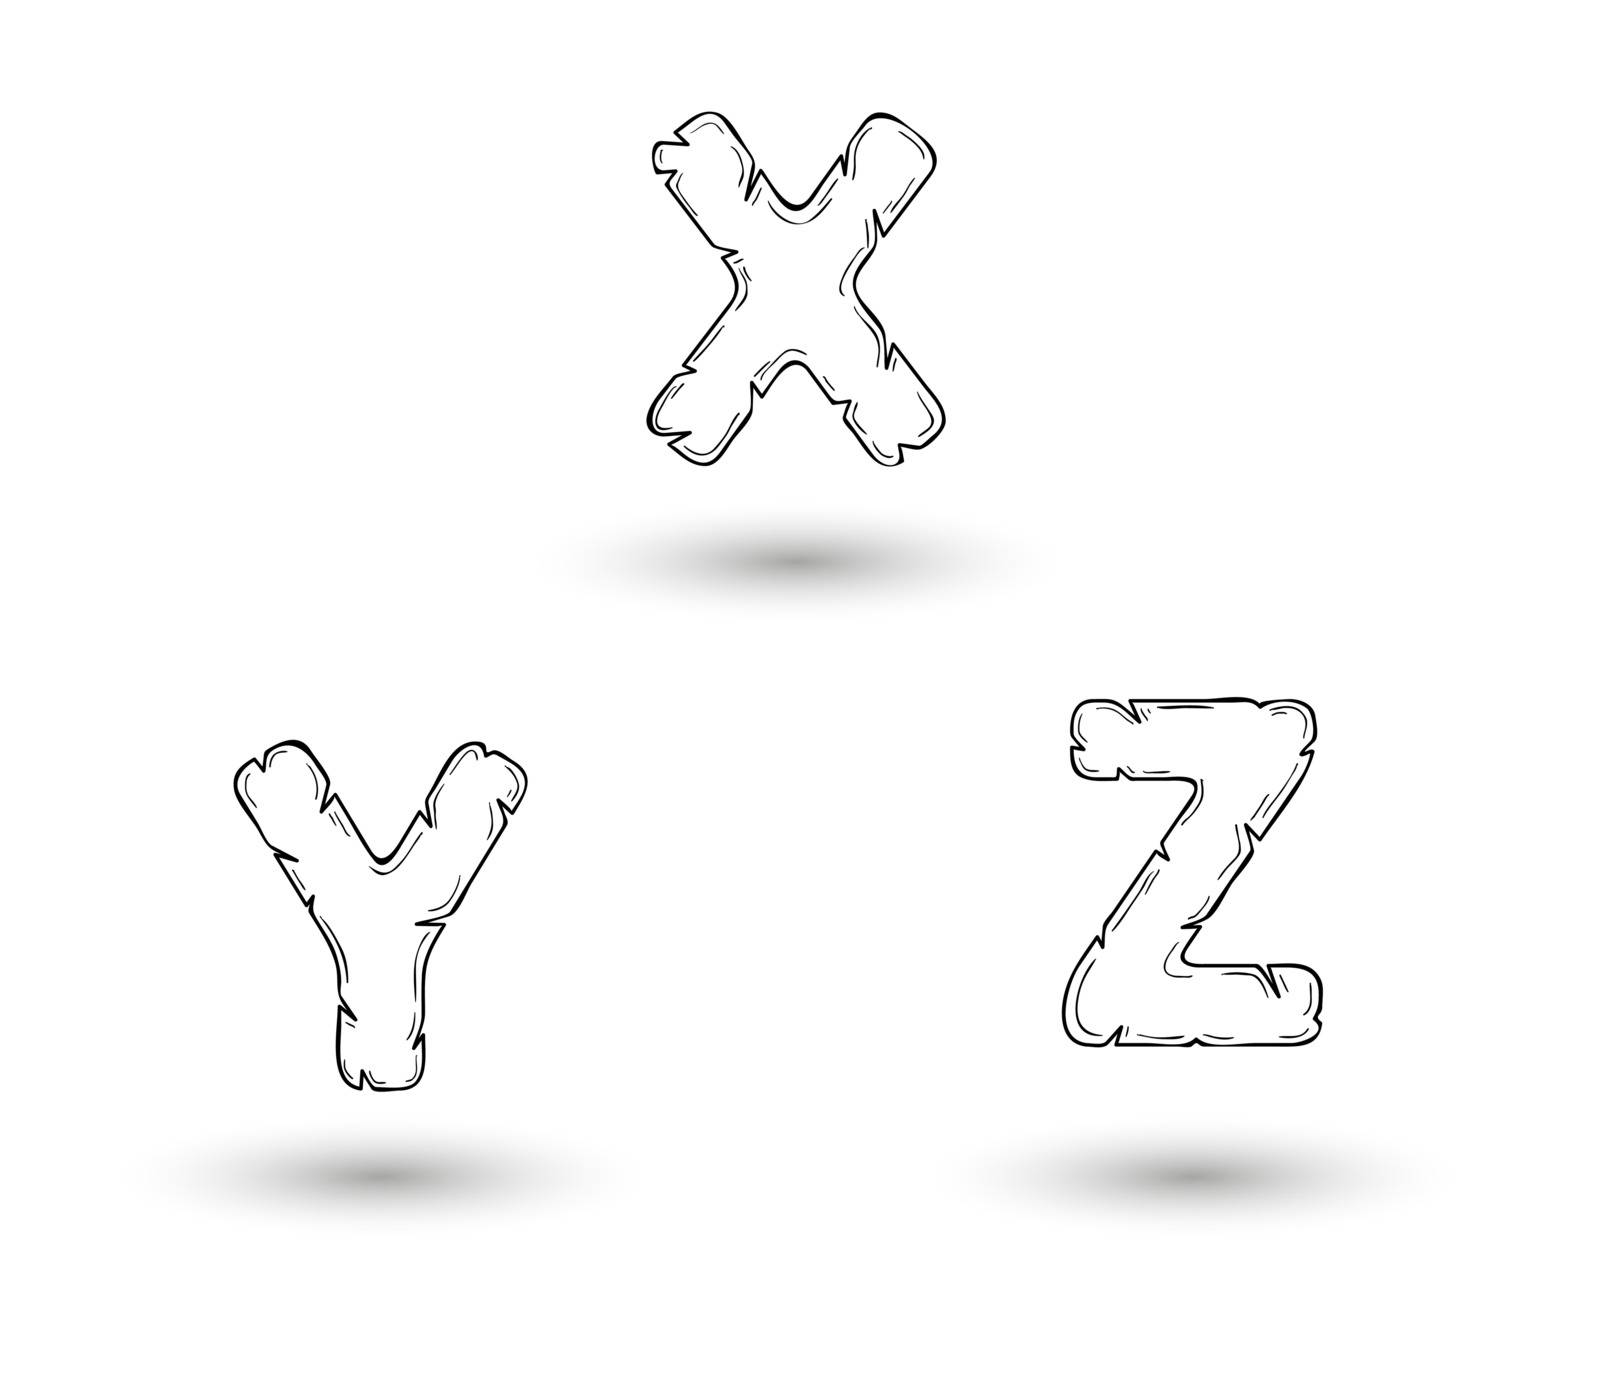 sketch jagged alphabet letters, X, Y, Z by muuraa